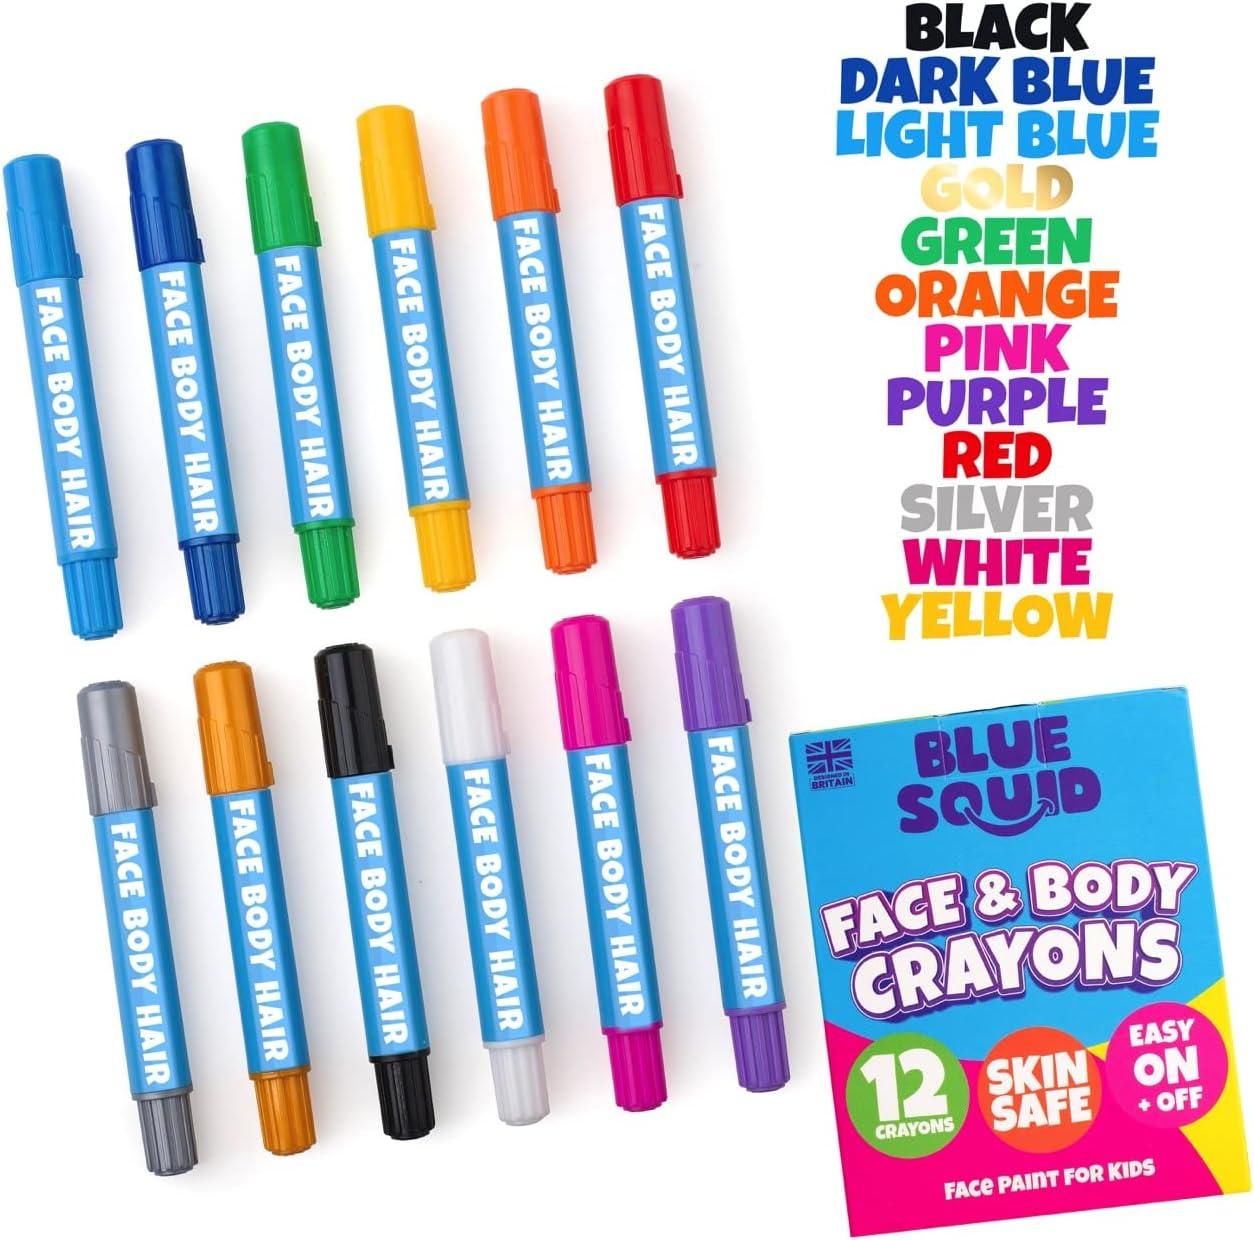 Blue Squid Face Painting Kit for Kids - 22 Color 160pcs Kids Face